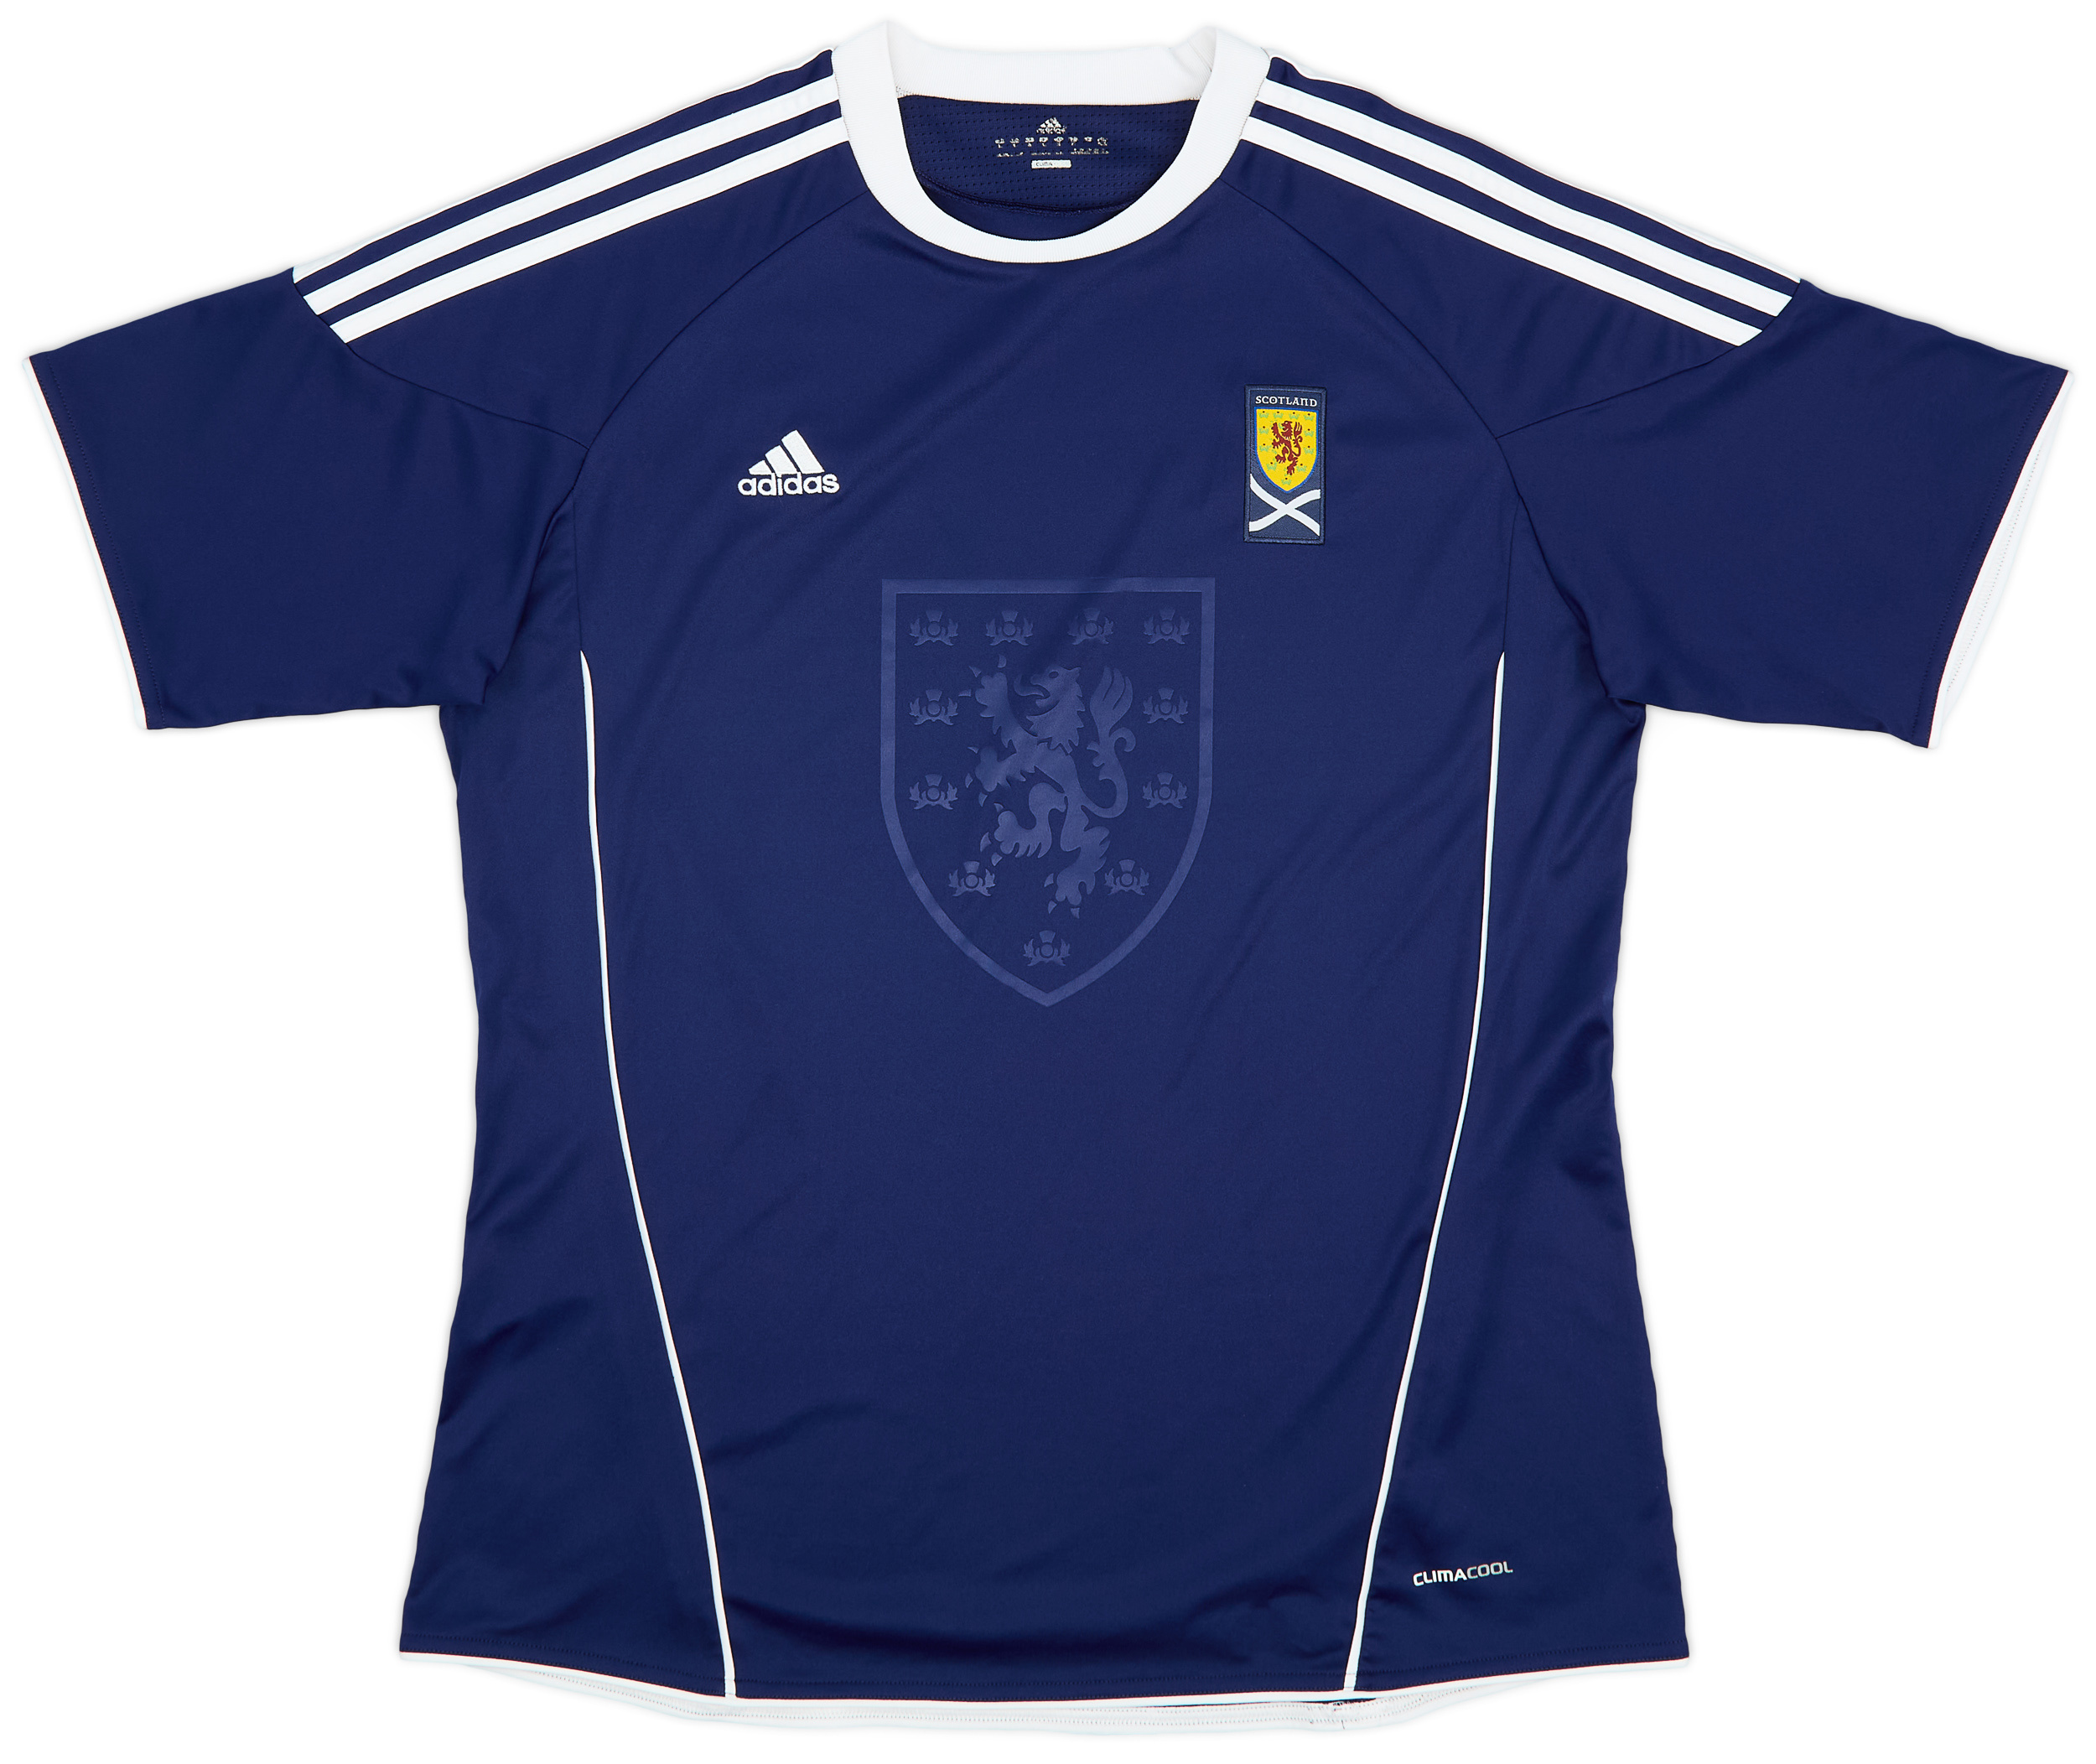 2010-11 Scotland Home Shirt - 8/10 - (Women's )